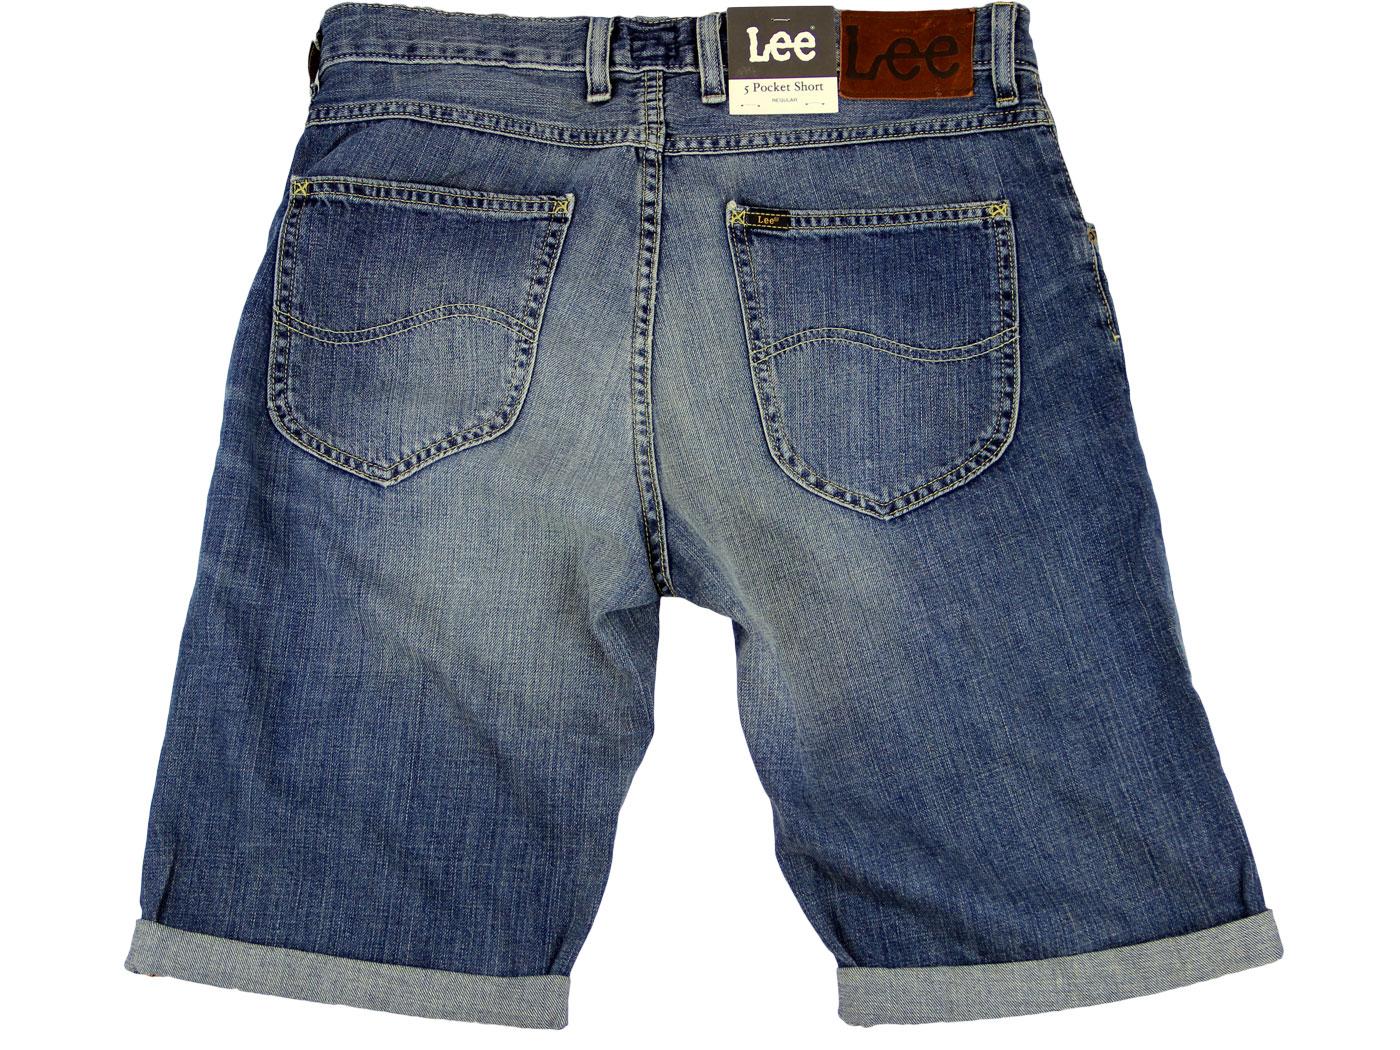 LEE JEANS Retro 70s Indie 5 Pocket Denim Shorts in Vintage Wash